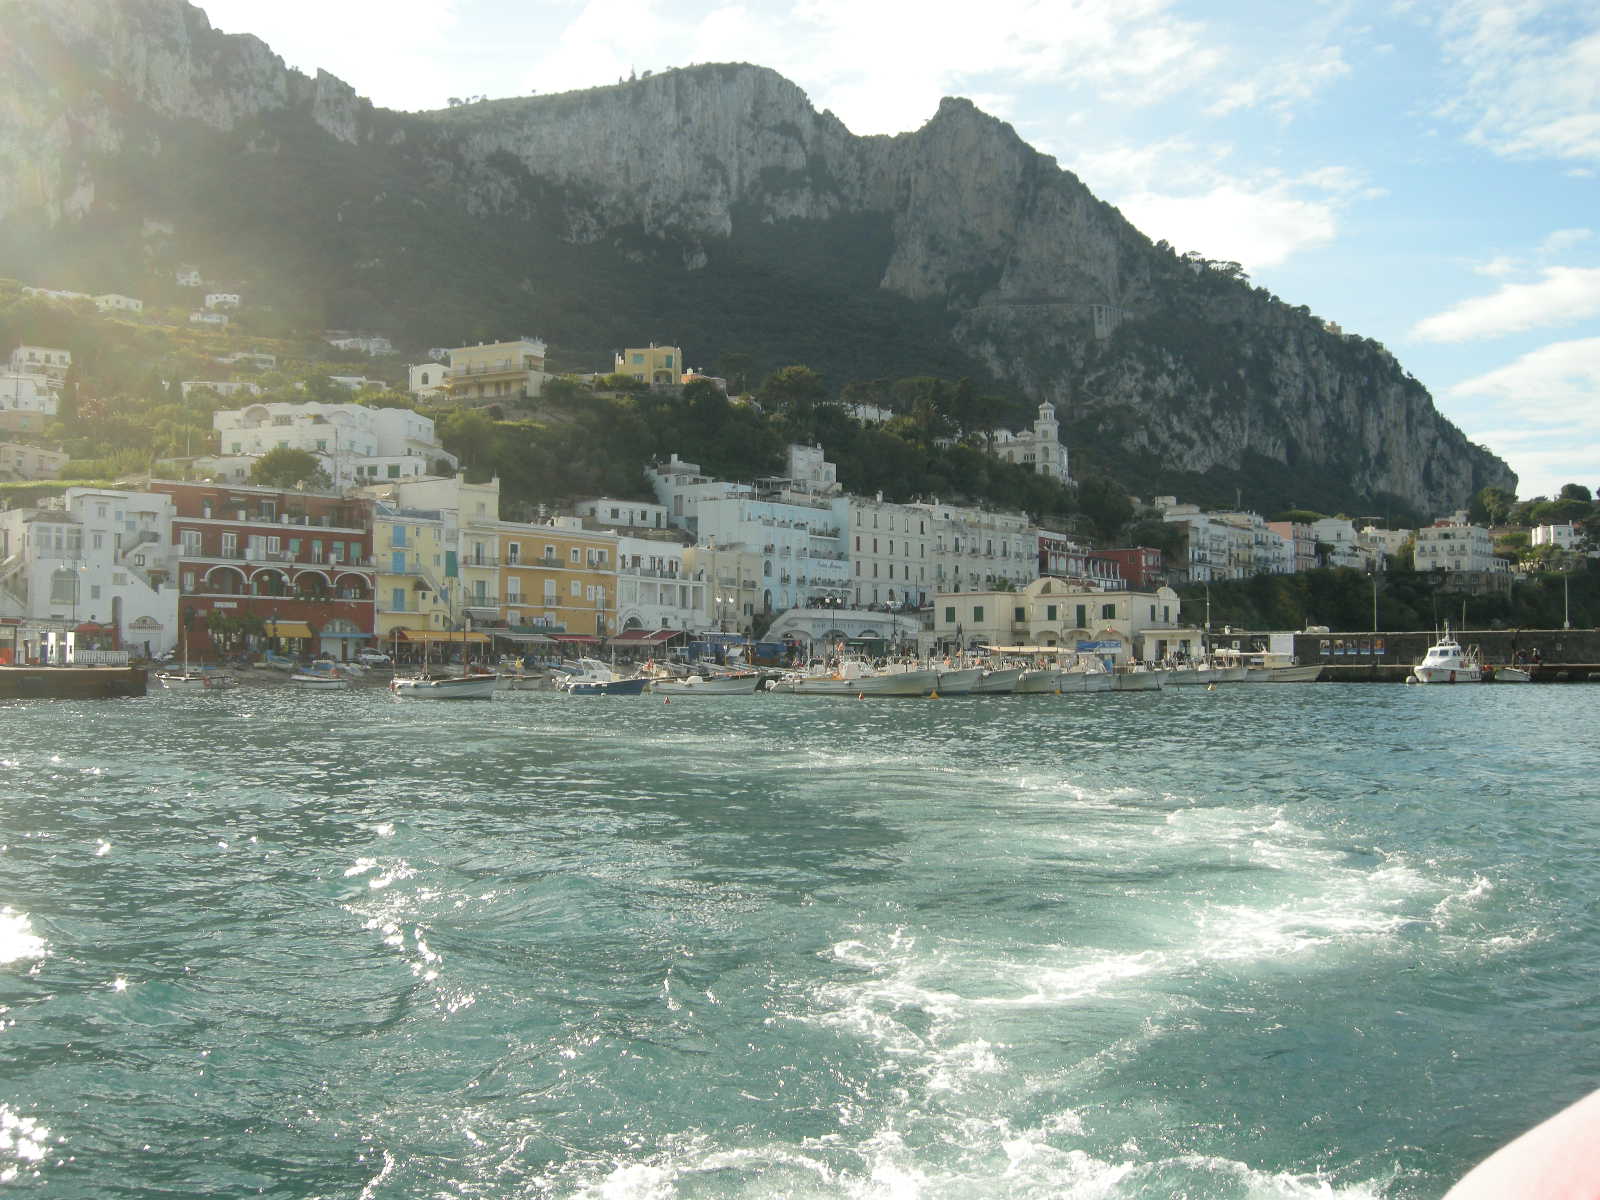 the island of Capri,Italy